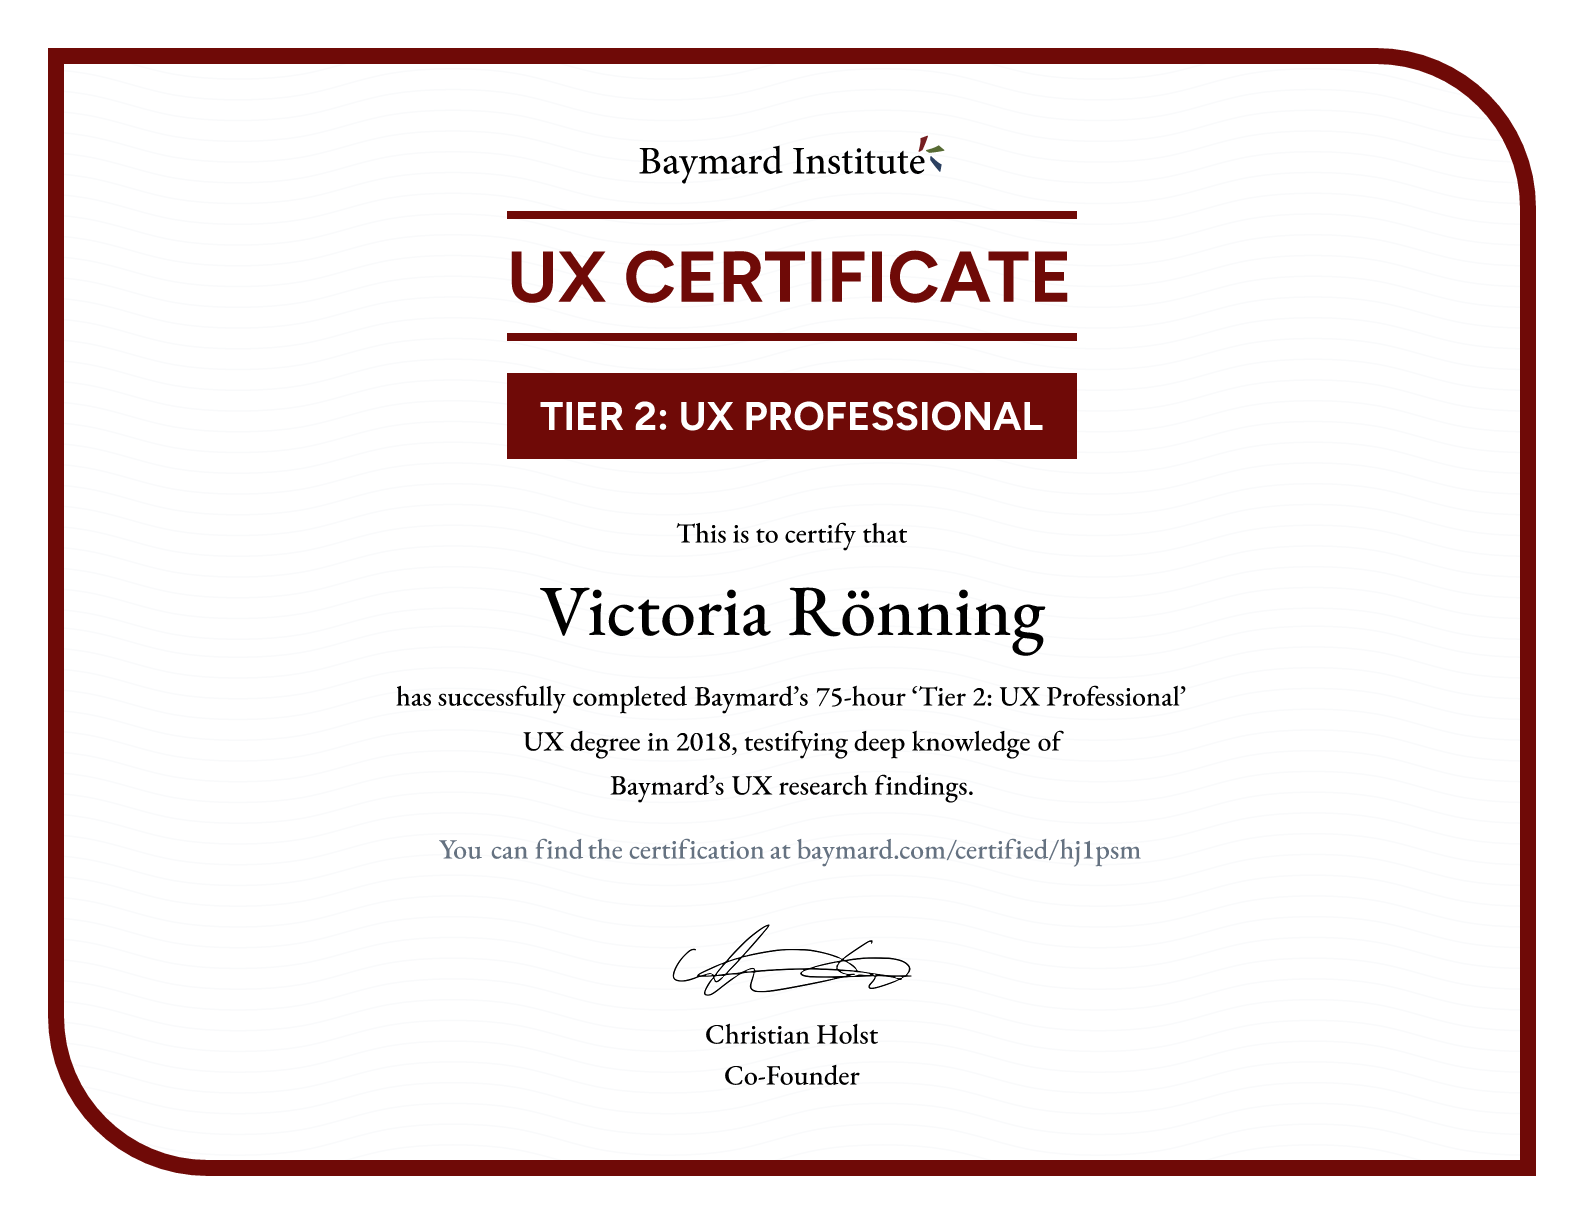 Victoria Rönning’s certificate